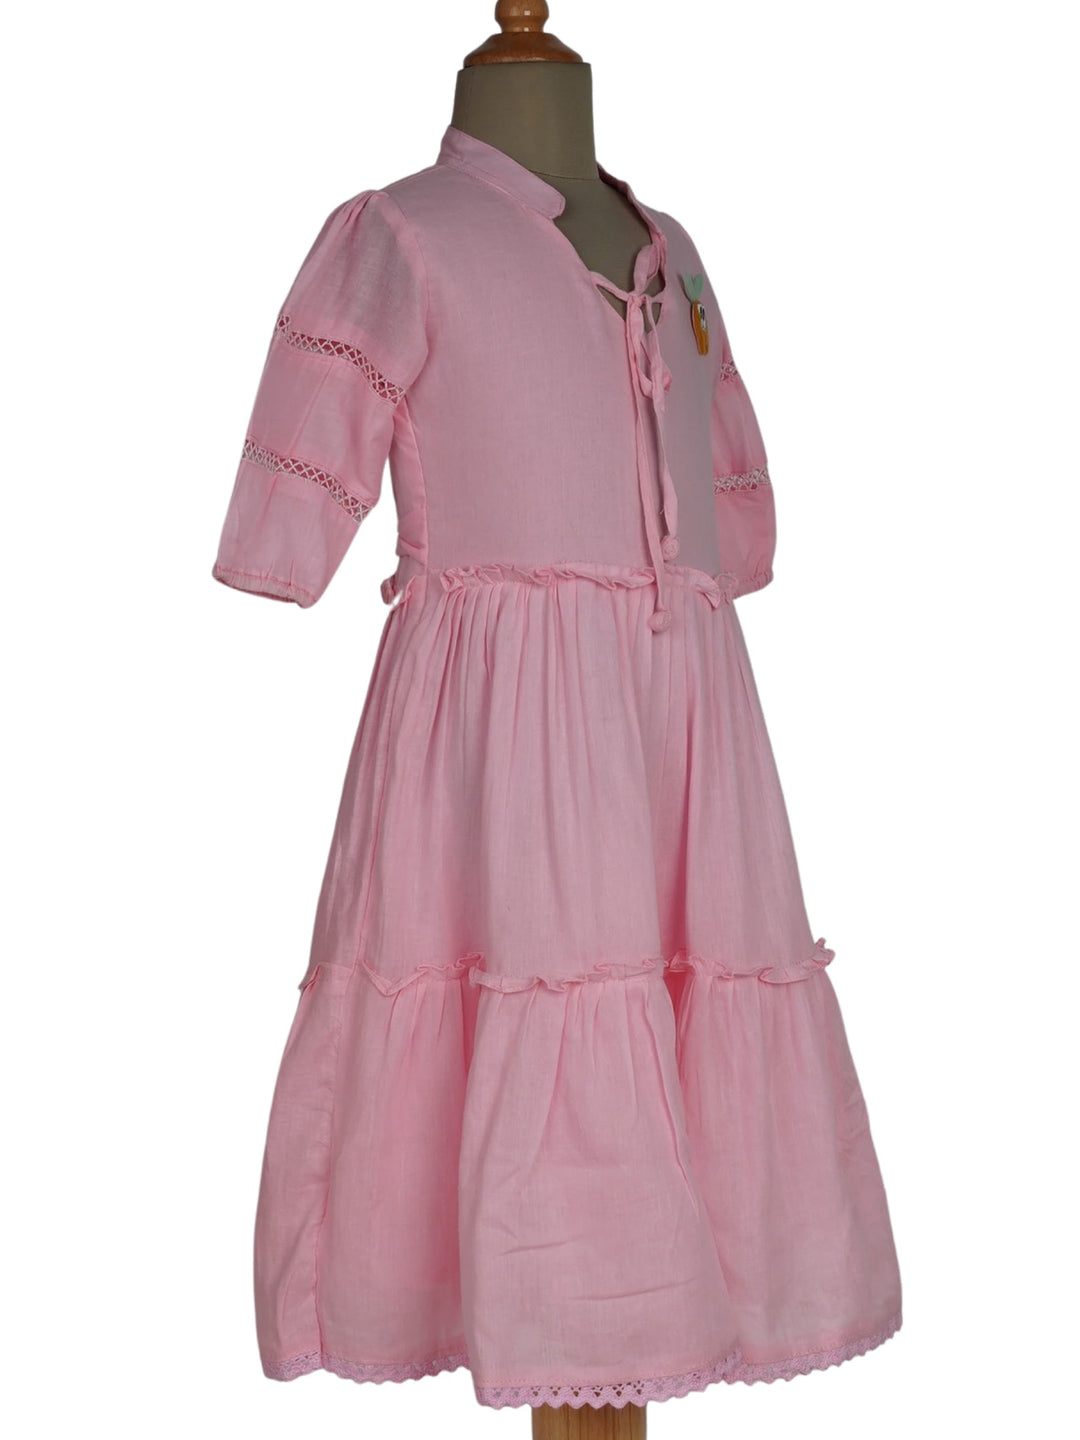 The Nesavu Frocks & Dresses Monochrome Cotton Wear For Girls With Tie-Up Mandarin Collar psr silks Nesavu